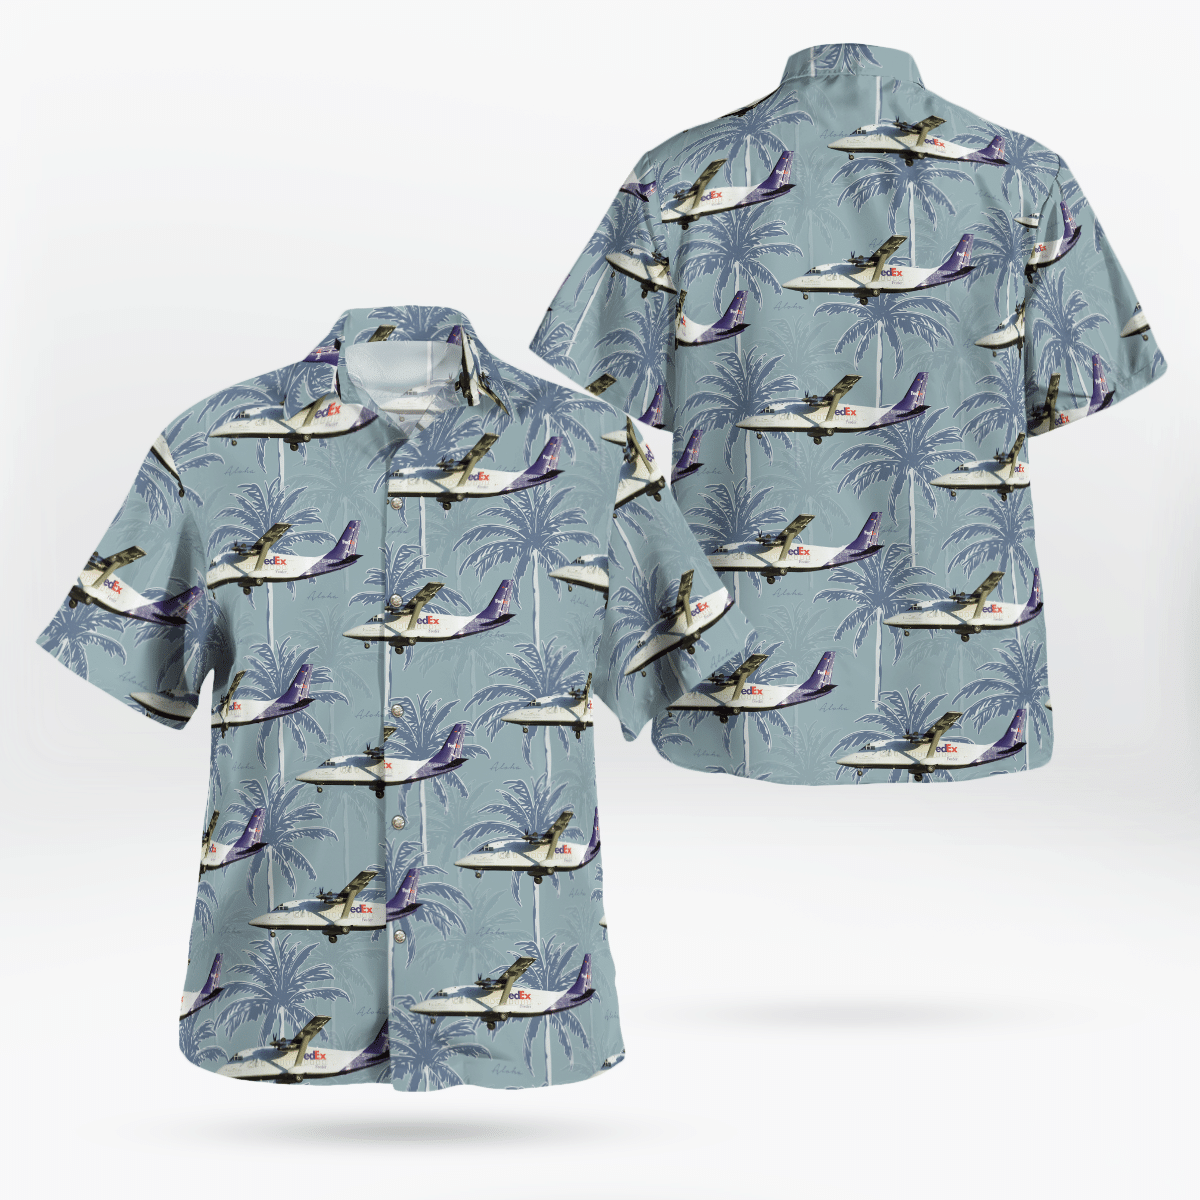 Get a new Hawaiian shirt to enjoy summer vacation 275